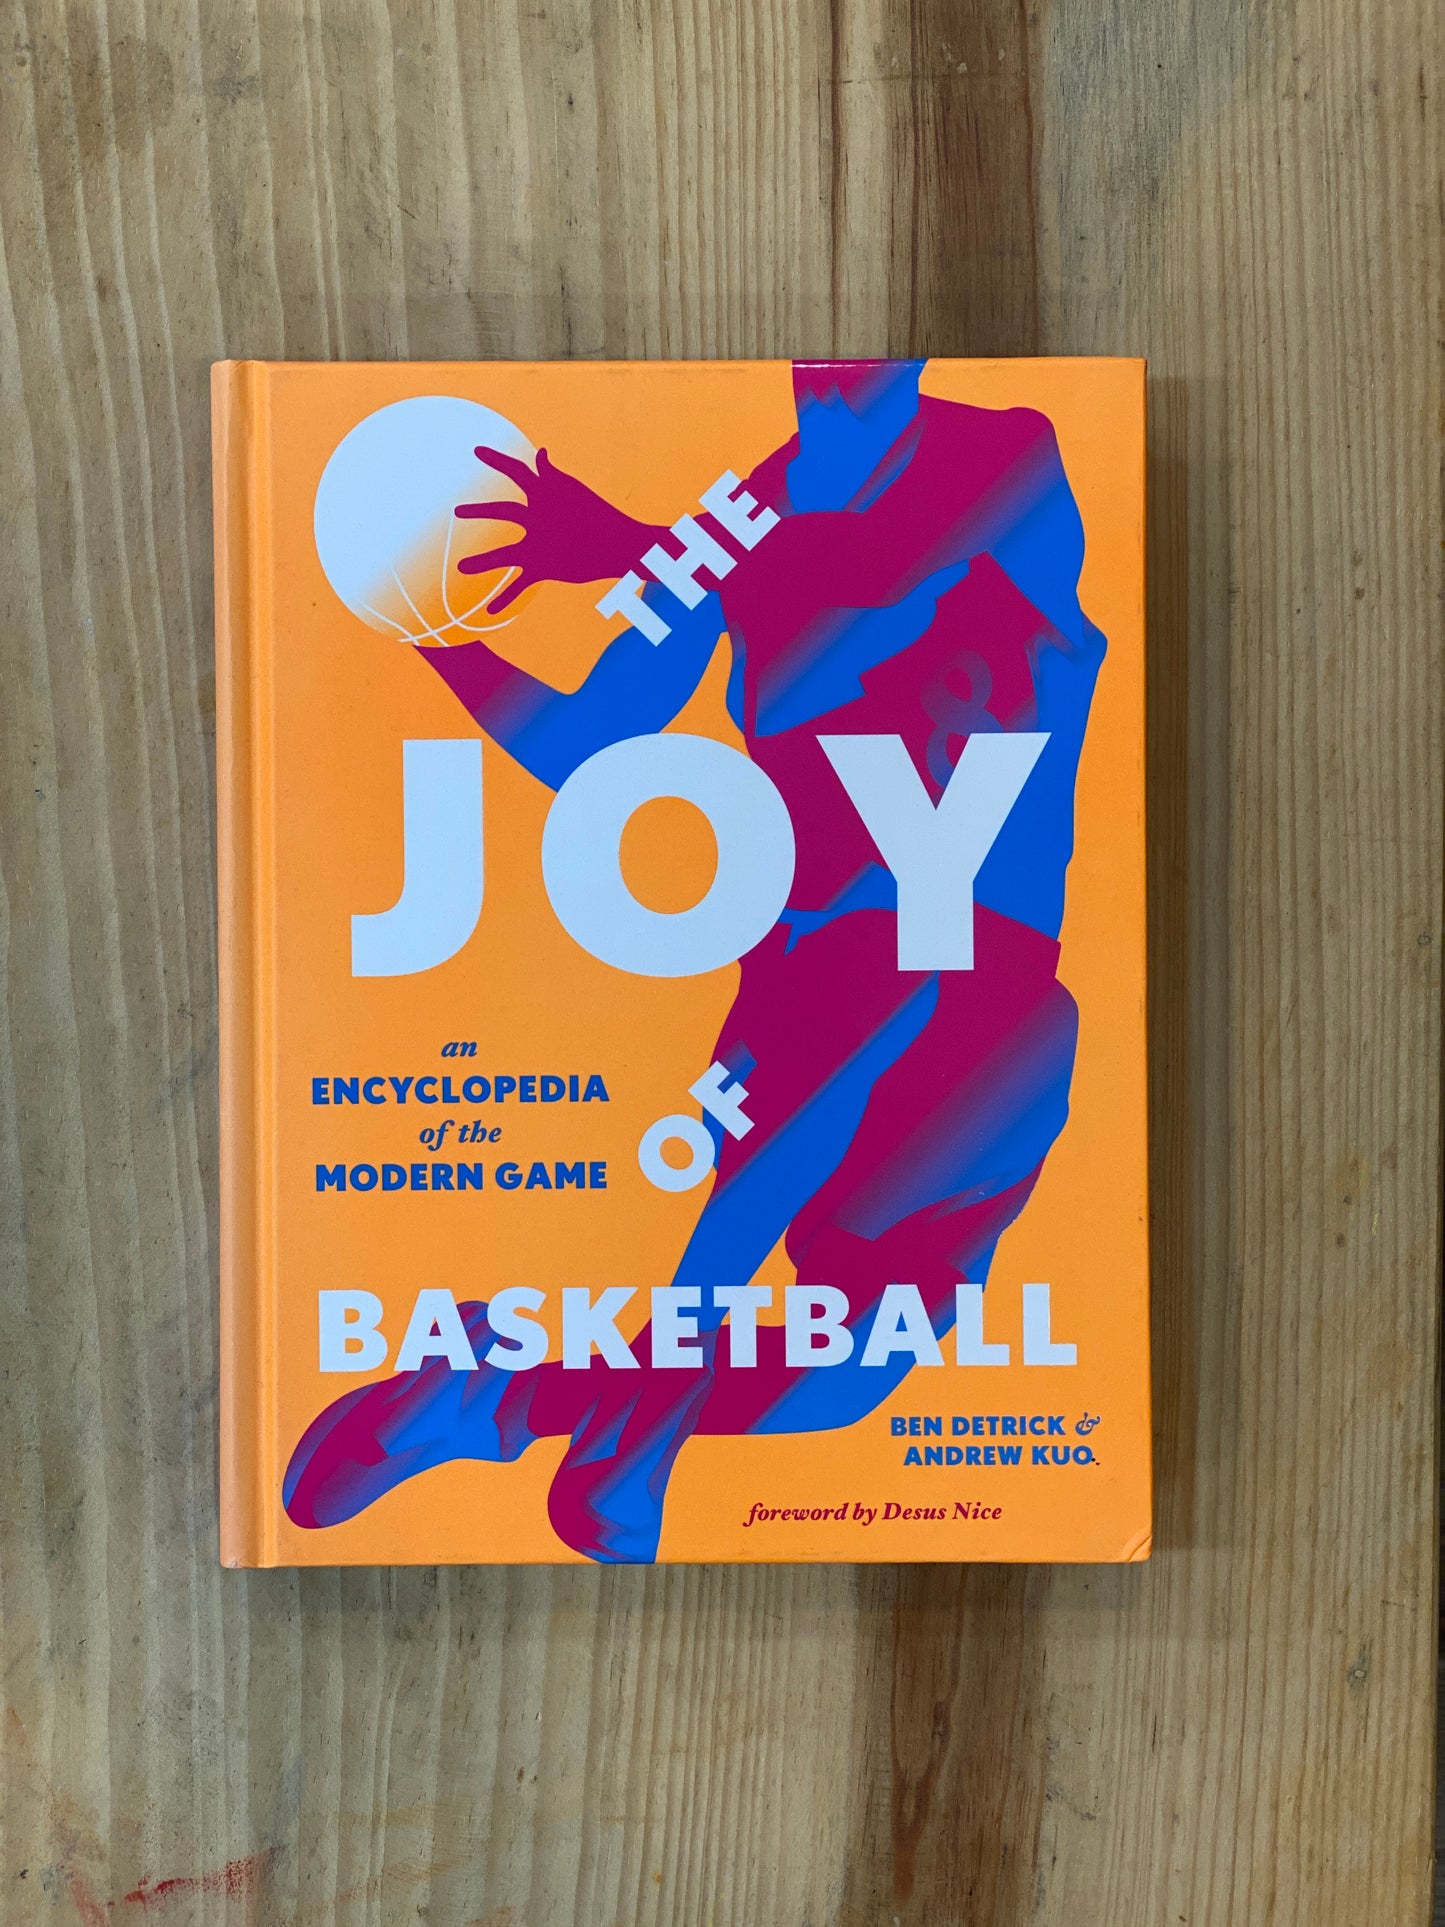 Detrick & Kuo - The Joy of Basketball